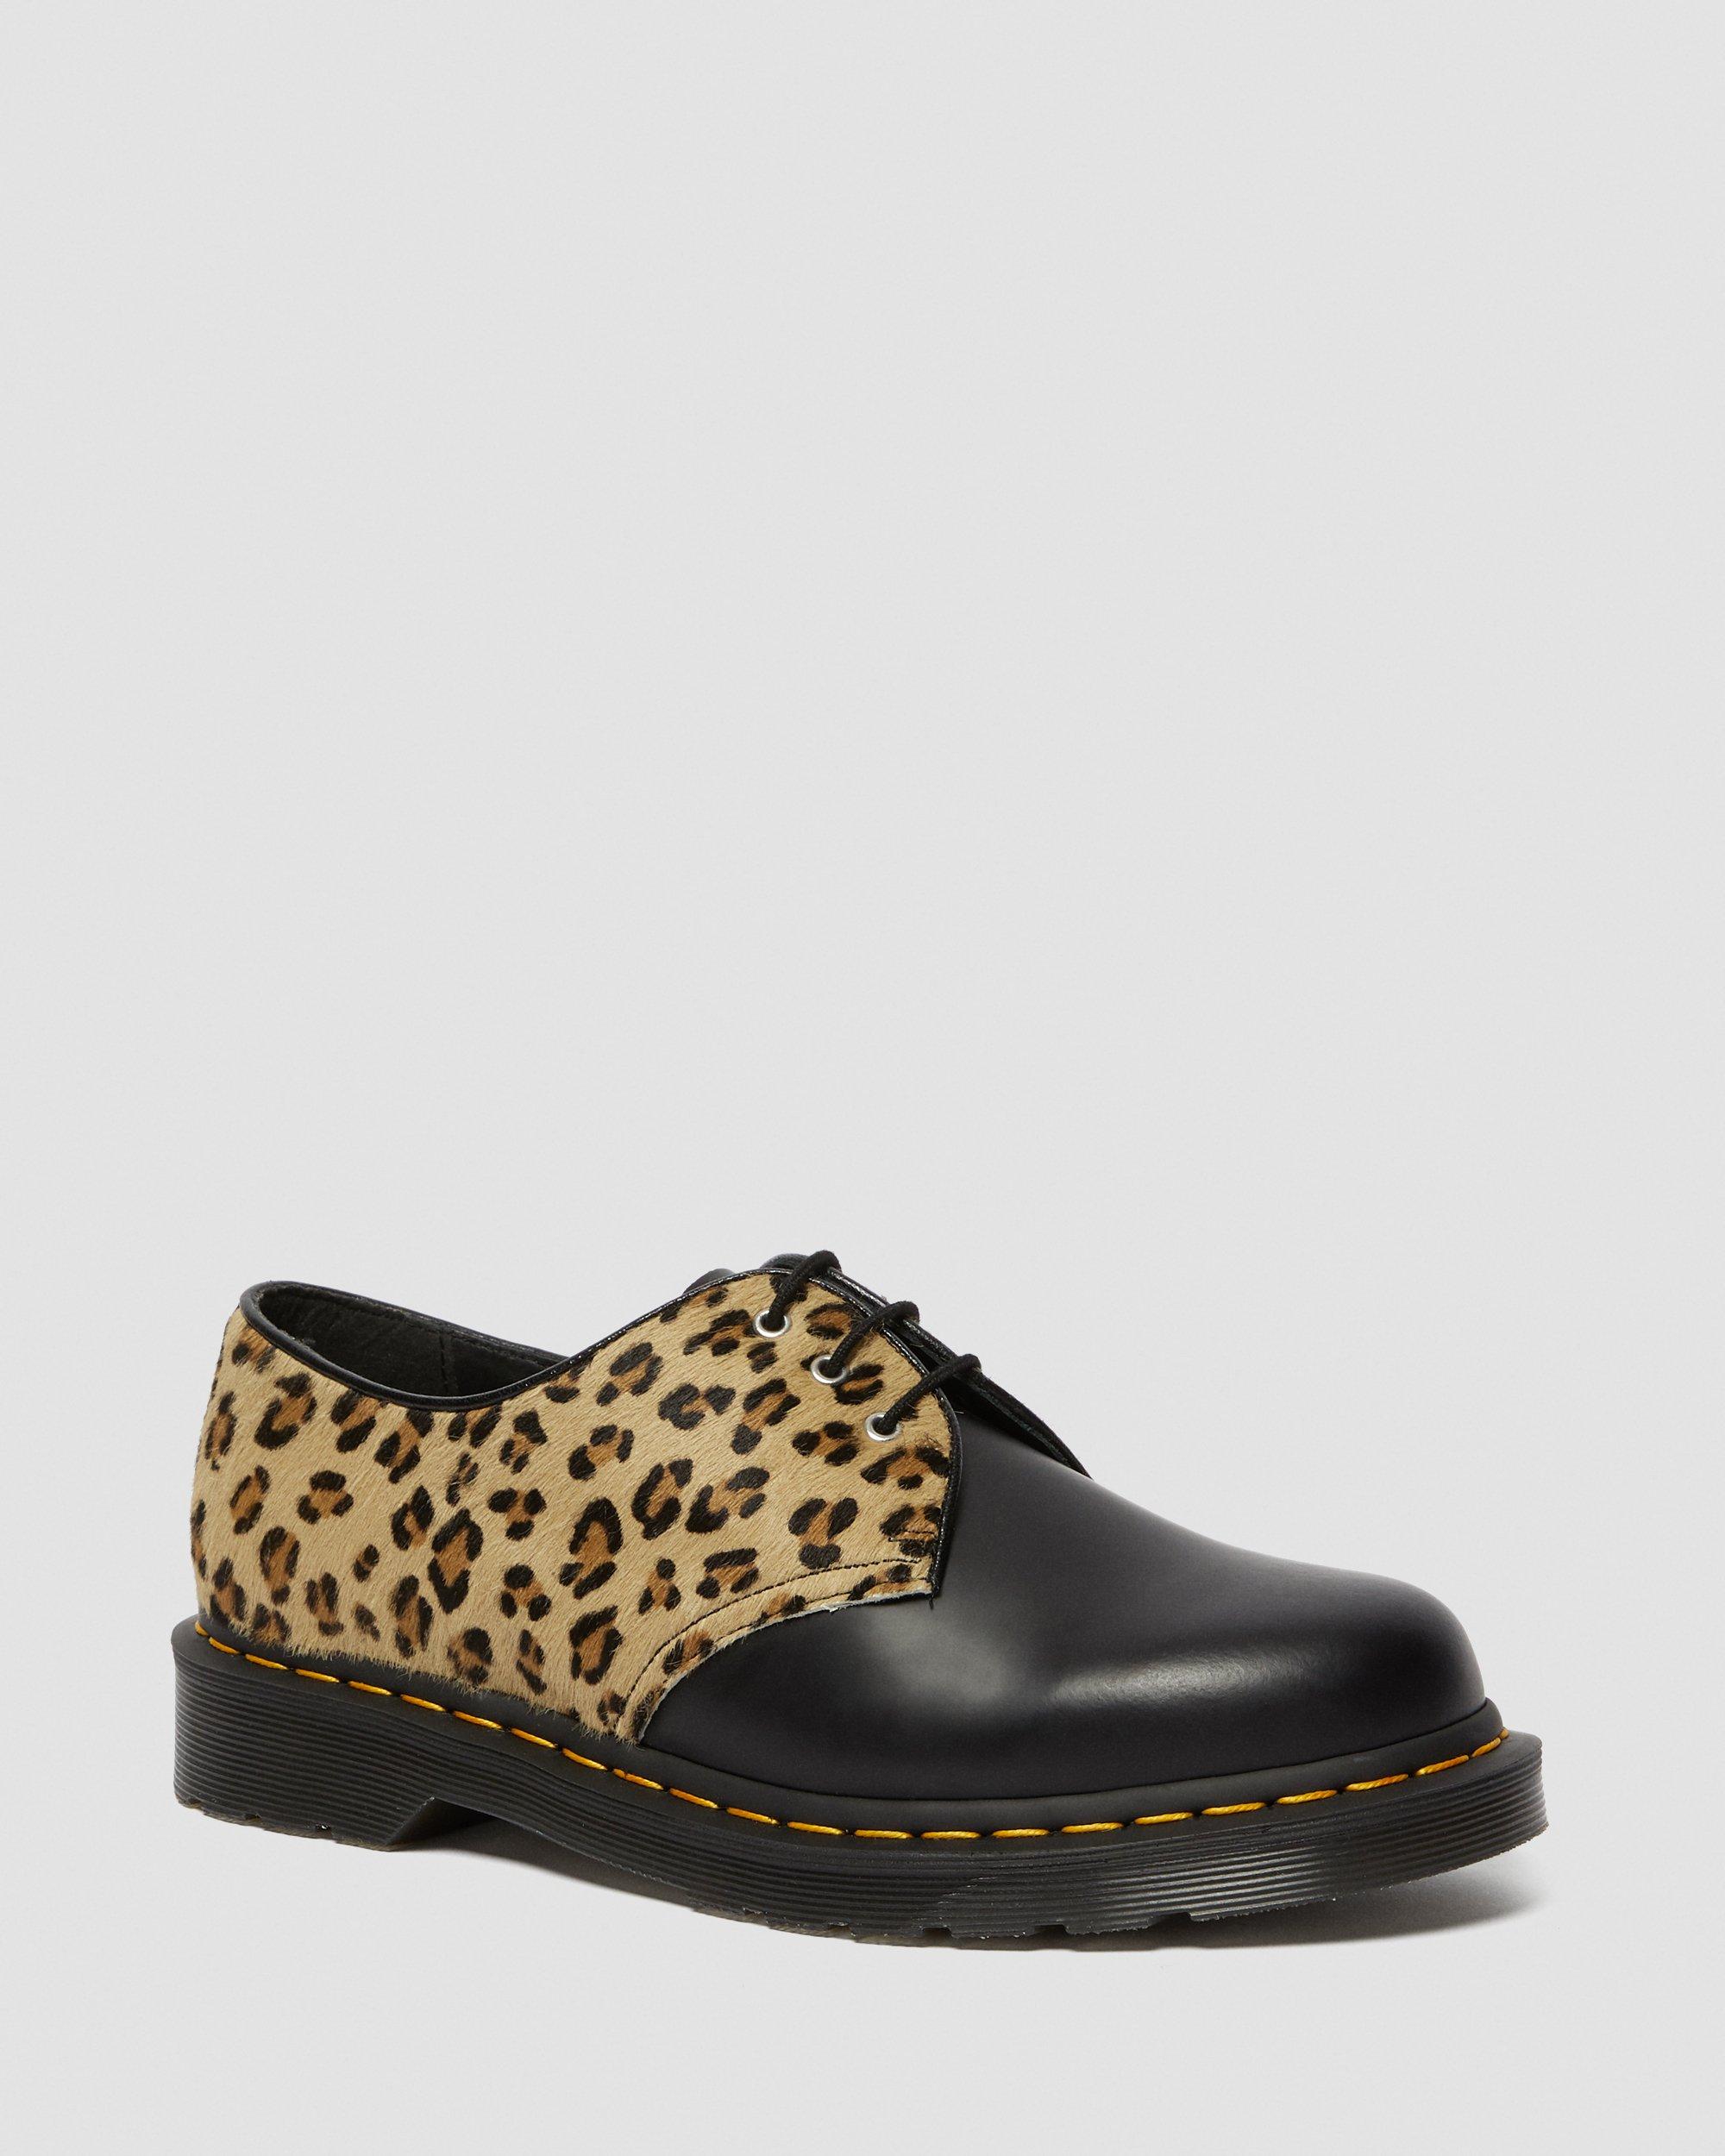 leopard print shoes ireland